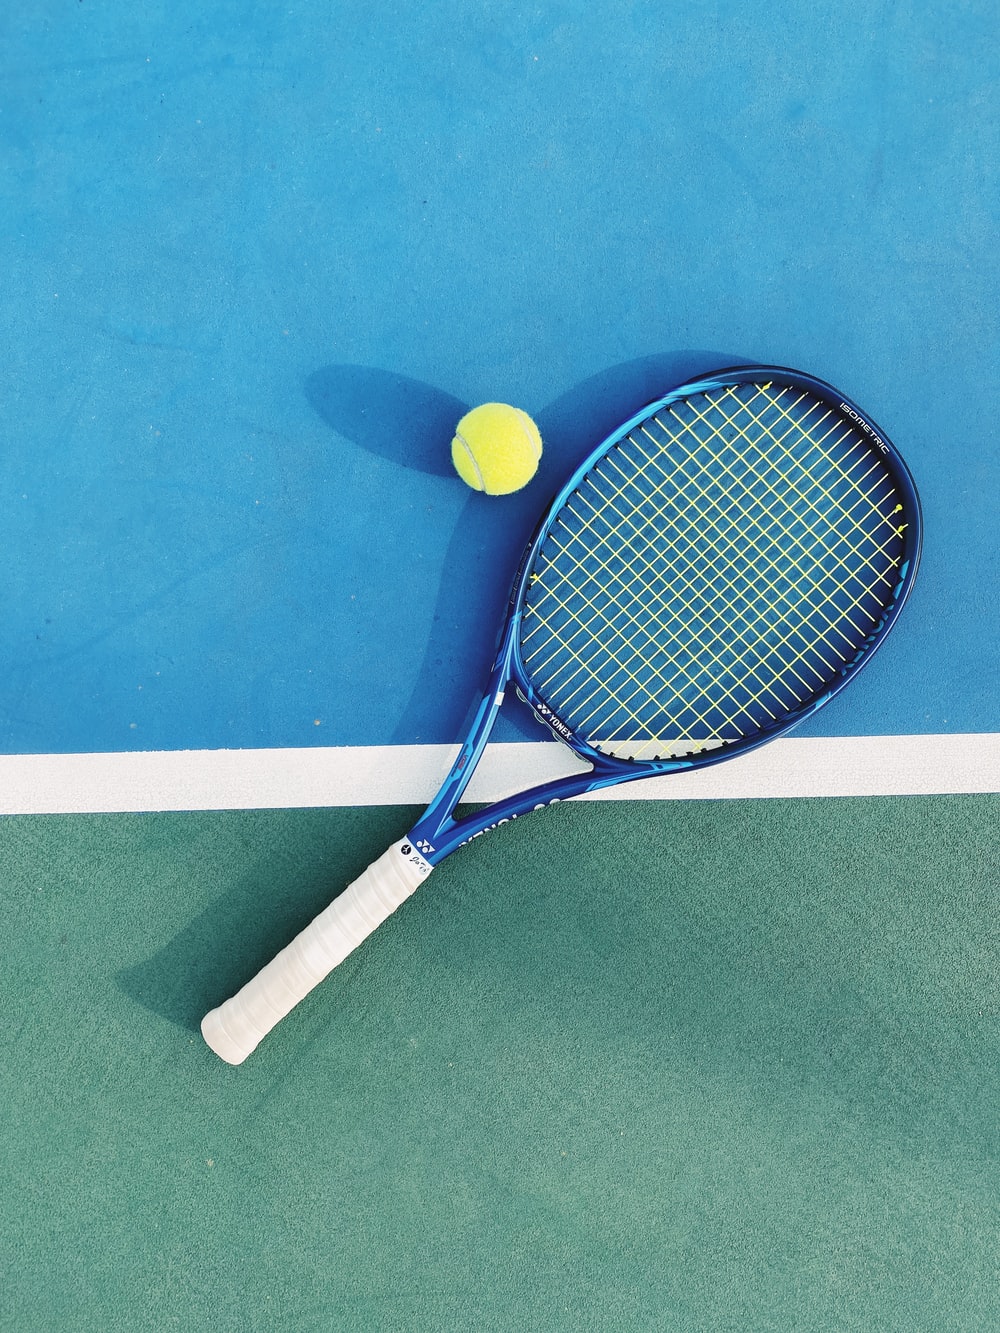 Pictures Of Tennis Rackets - KibrisPDR